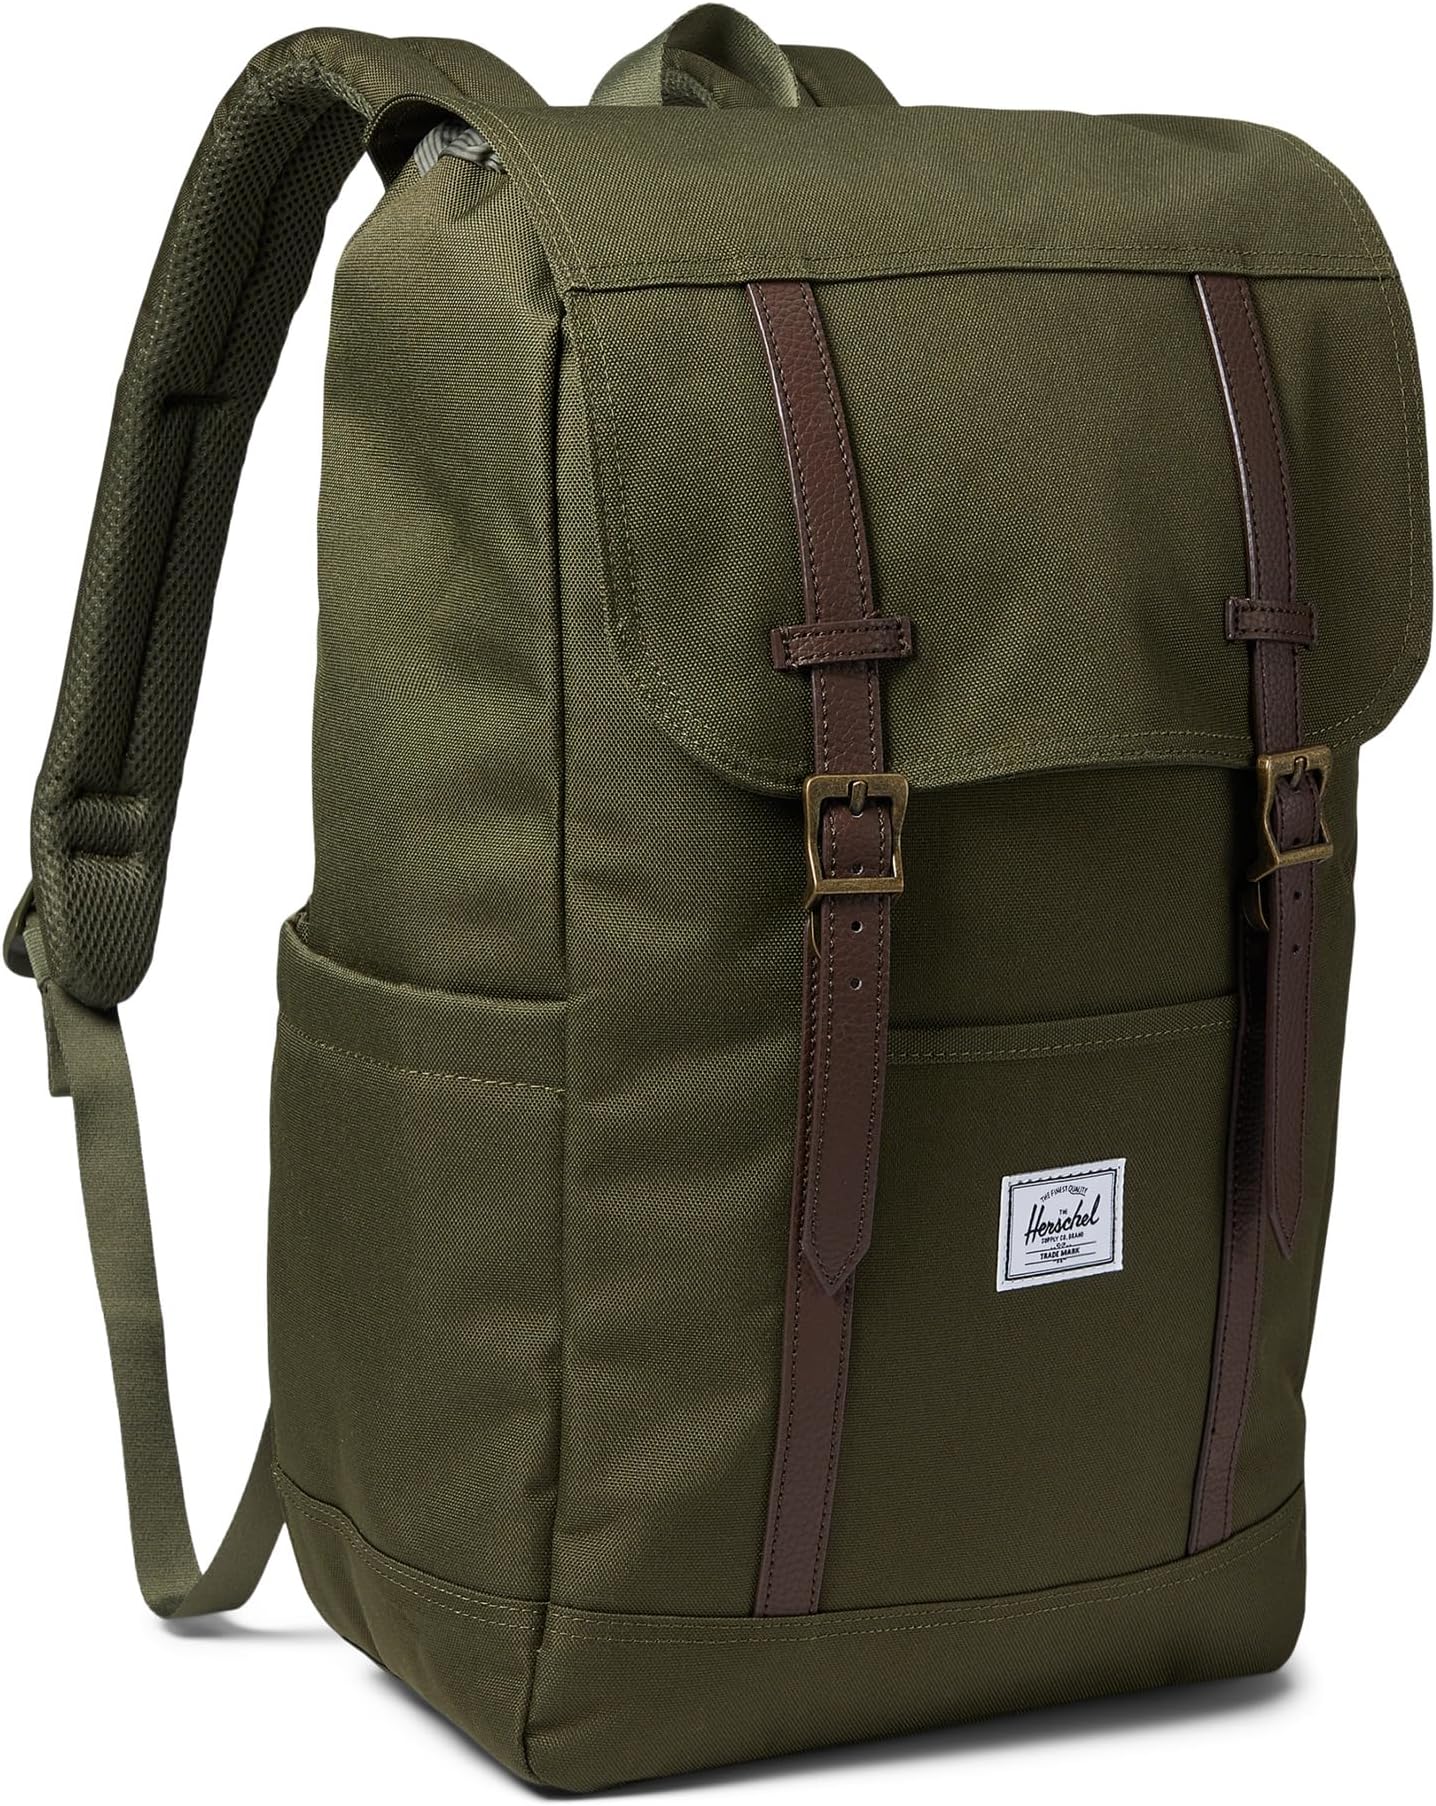 Рюкзак Retreat Backpack Herschel Supply Co., цвет Ivy Green рюкзак водостойкий для 15 ноутбука herschel retreat pro ivy green black